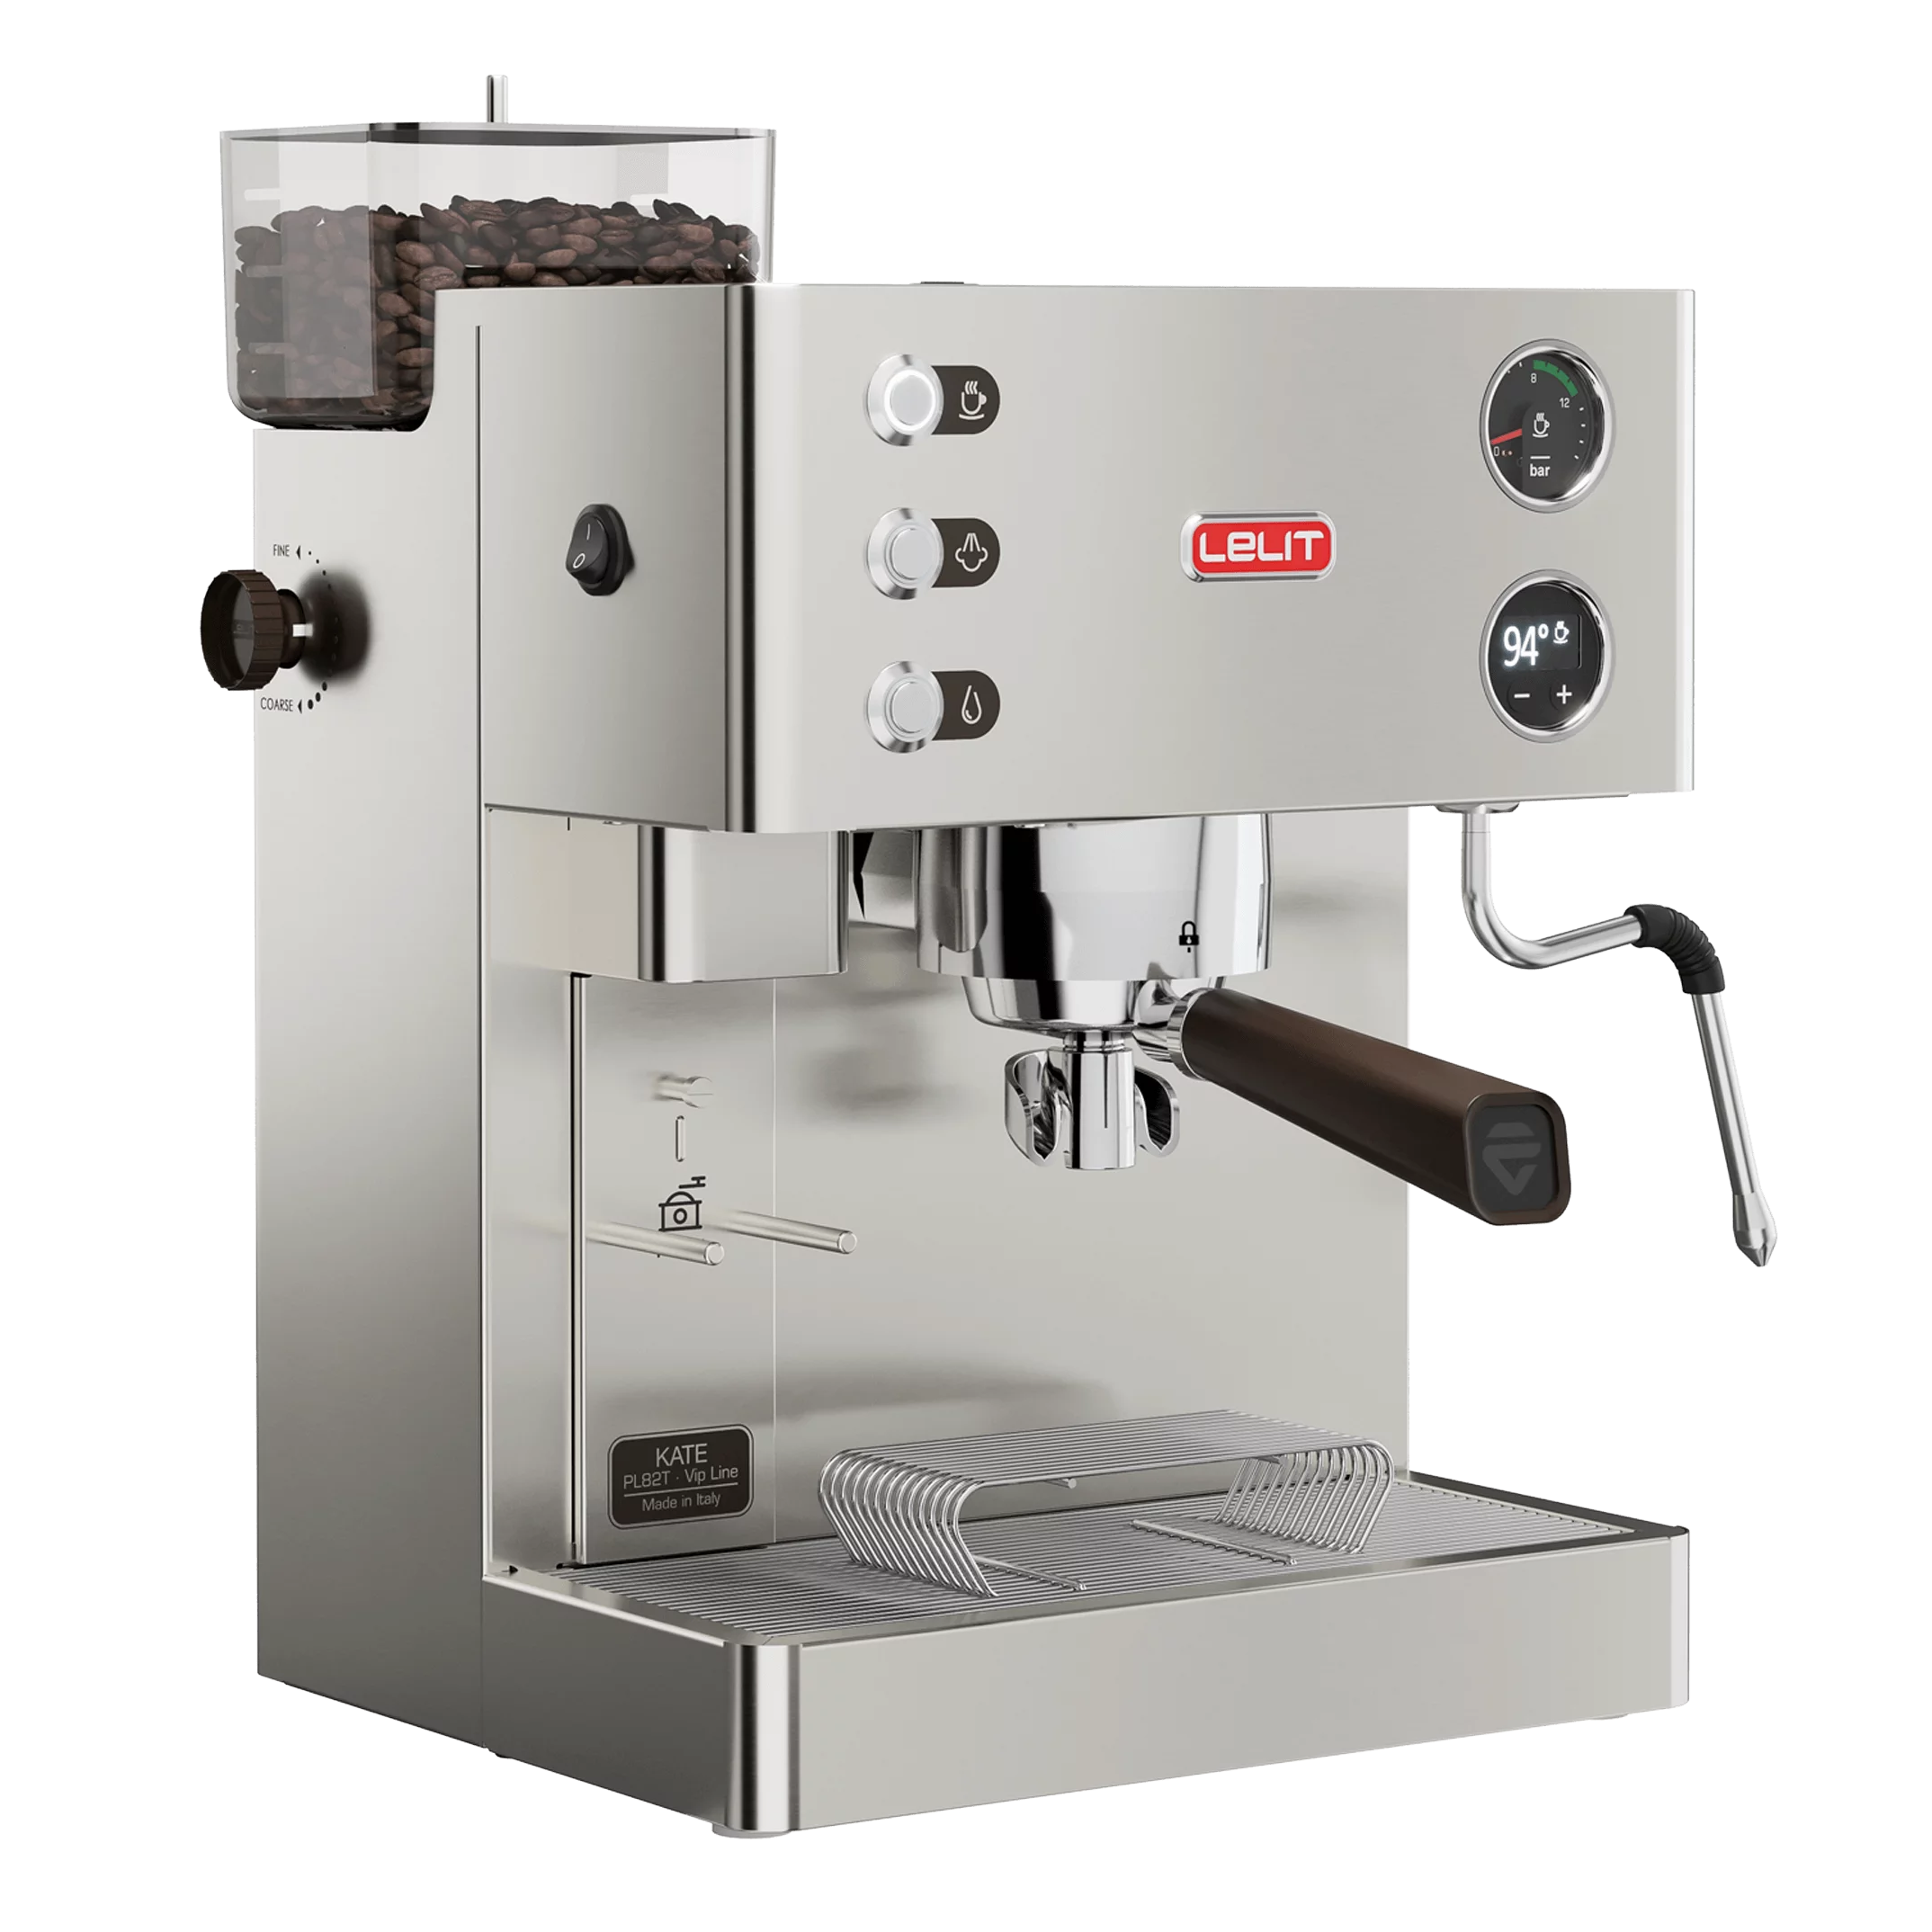 Get your Lelit Anna Espresso Machine today!